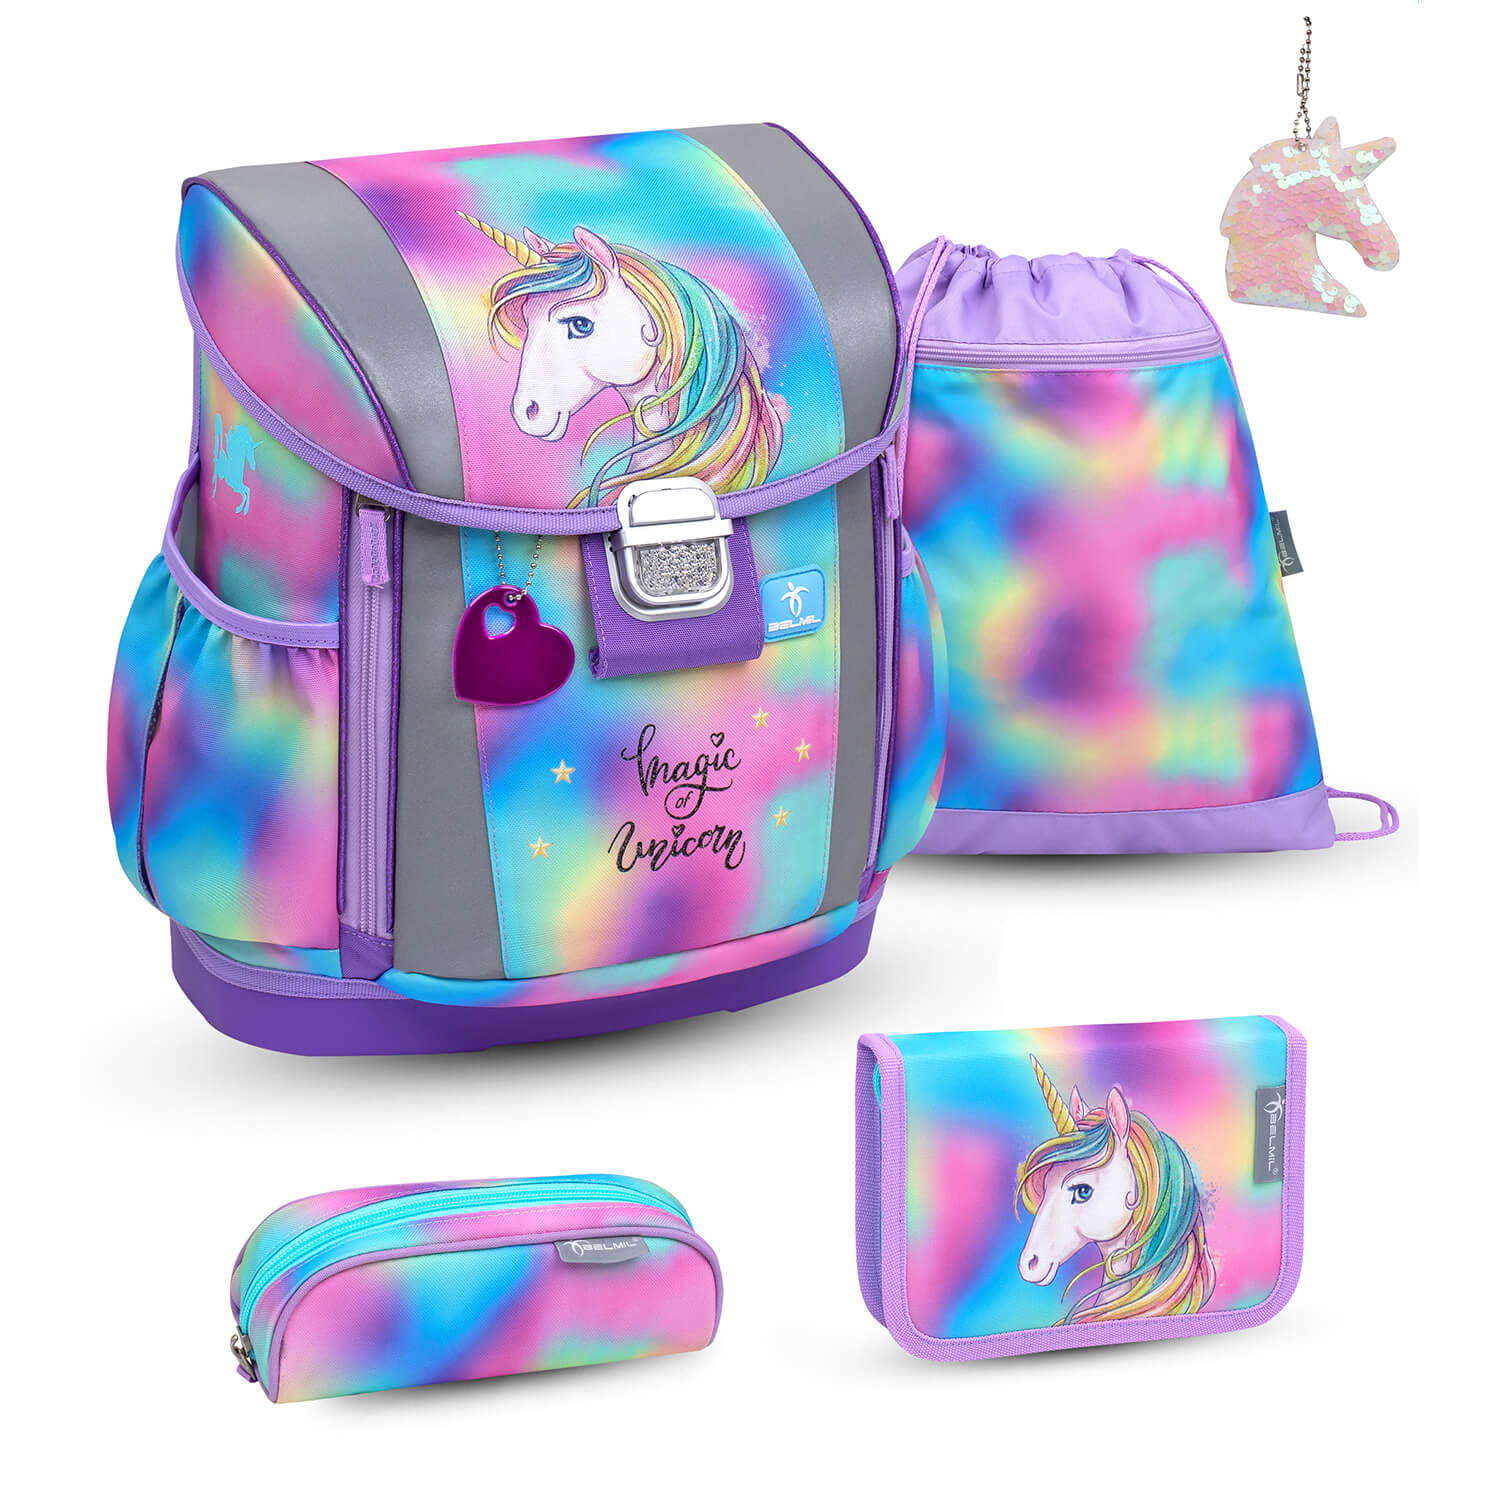 Customize Me Rainbow Color schoolbag set 5 pcs with GRATIS keychain